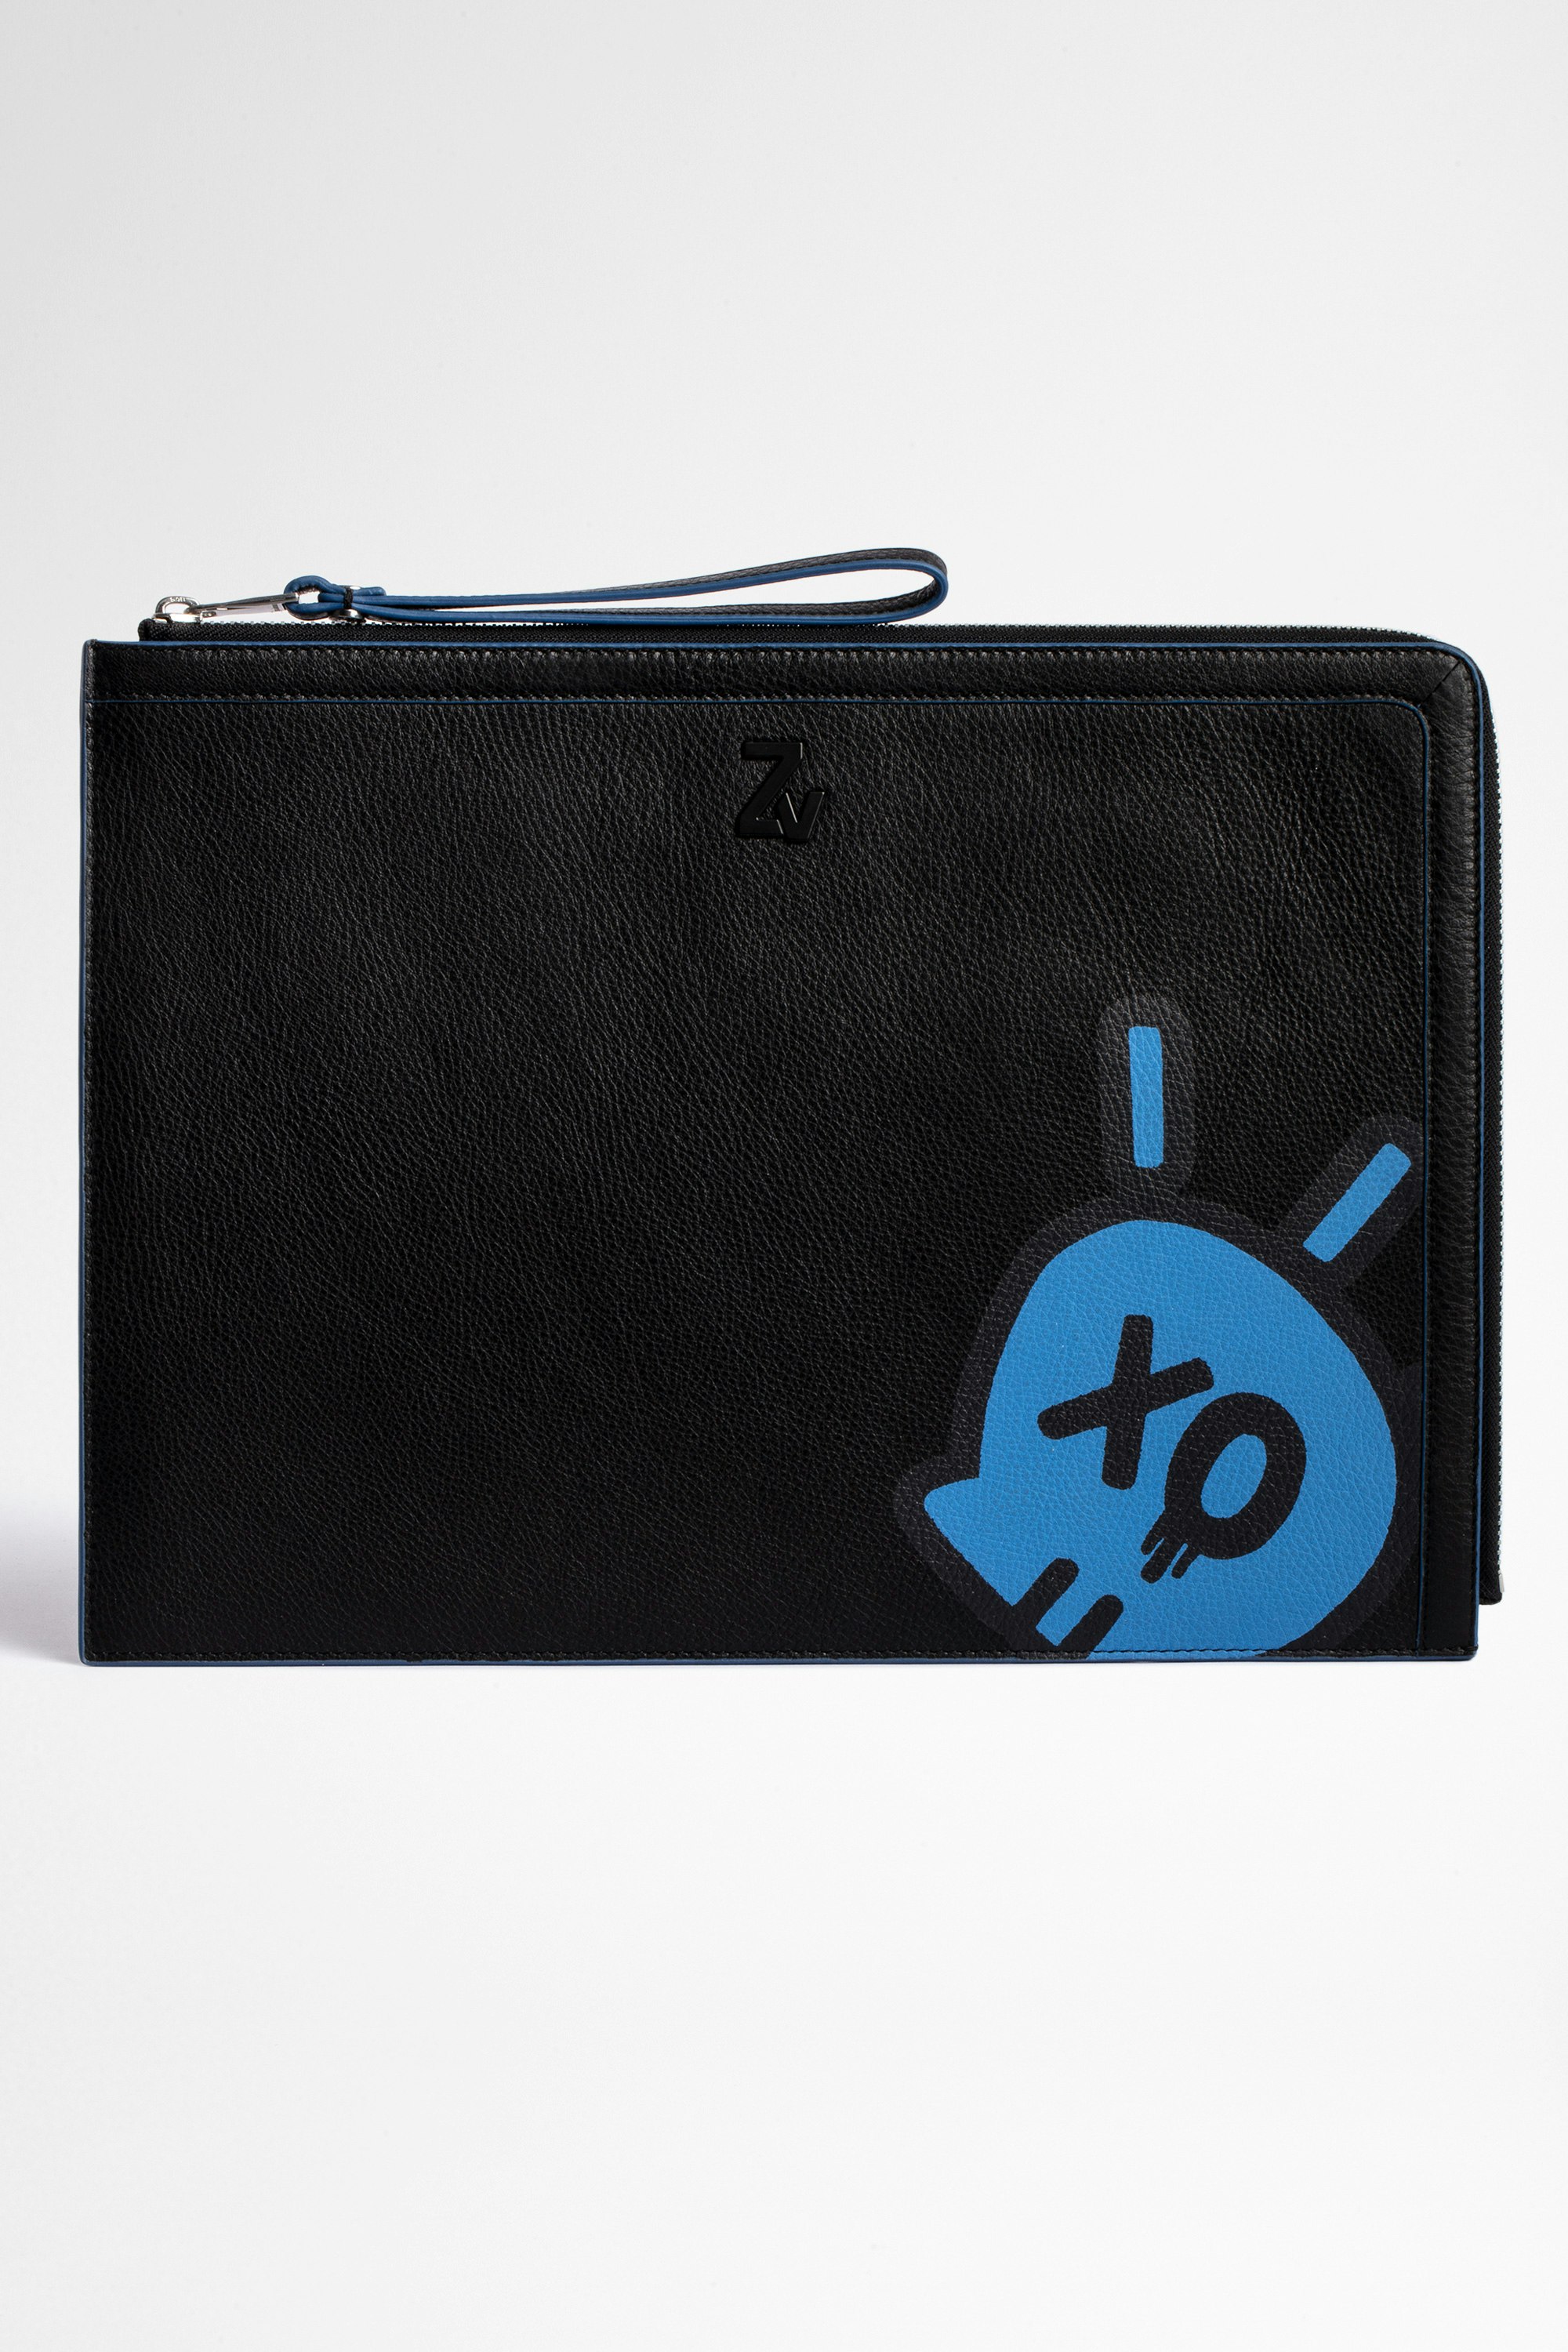 ZV John 財布 Men's leather card holder in blue with skull